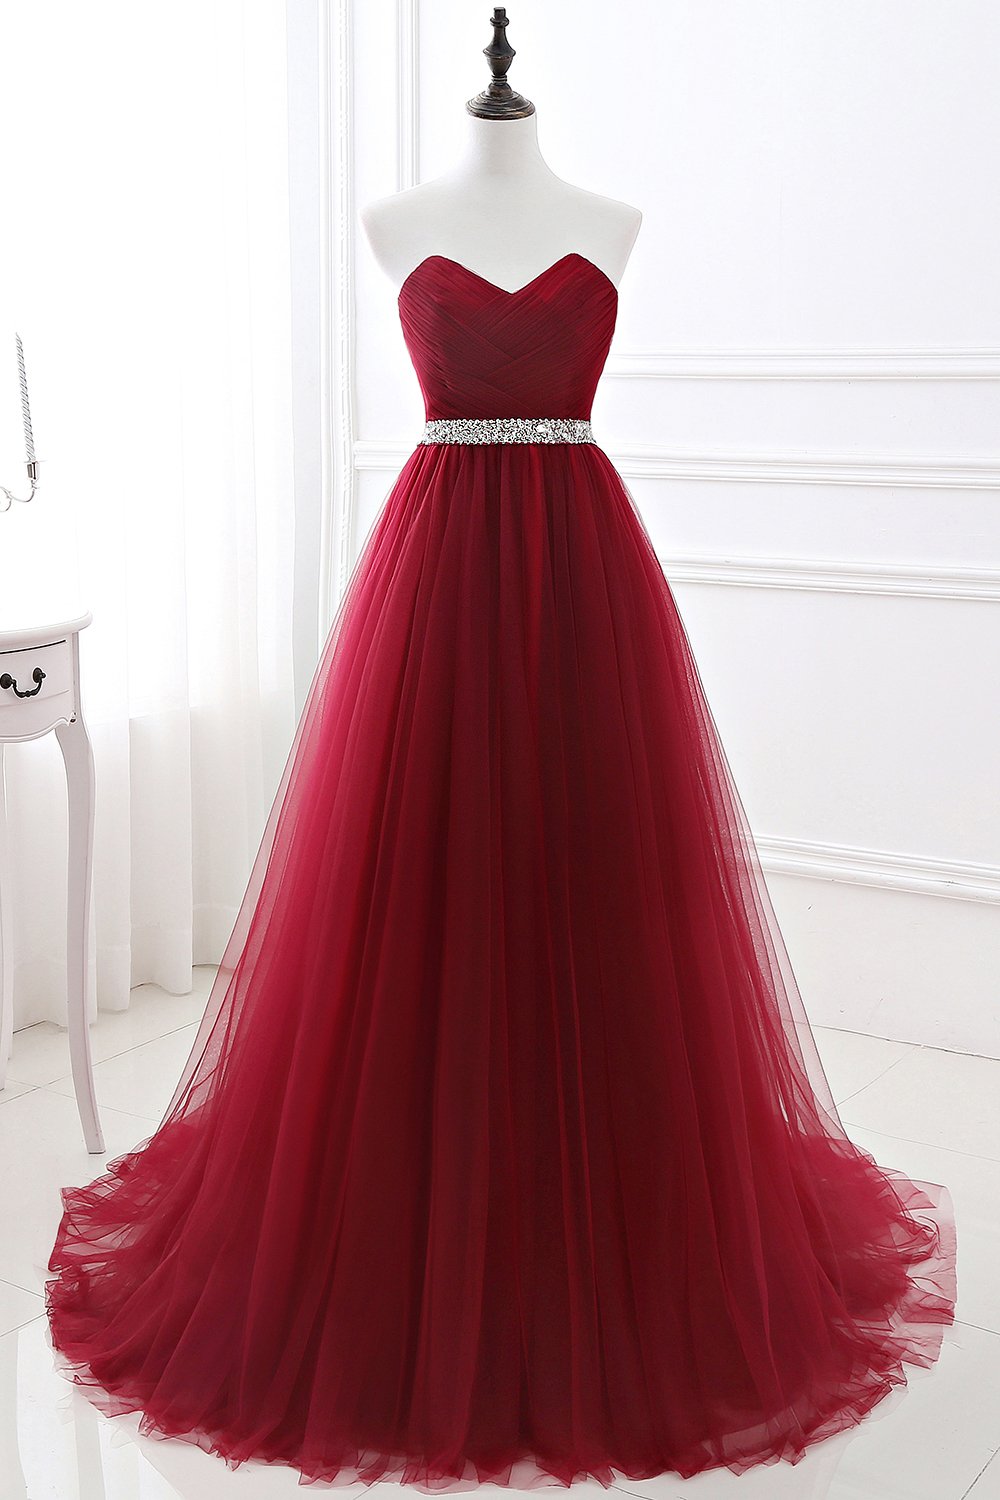 Dresseswow Burgundy Sweetheart Tulle Long prom Dress Crystal